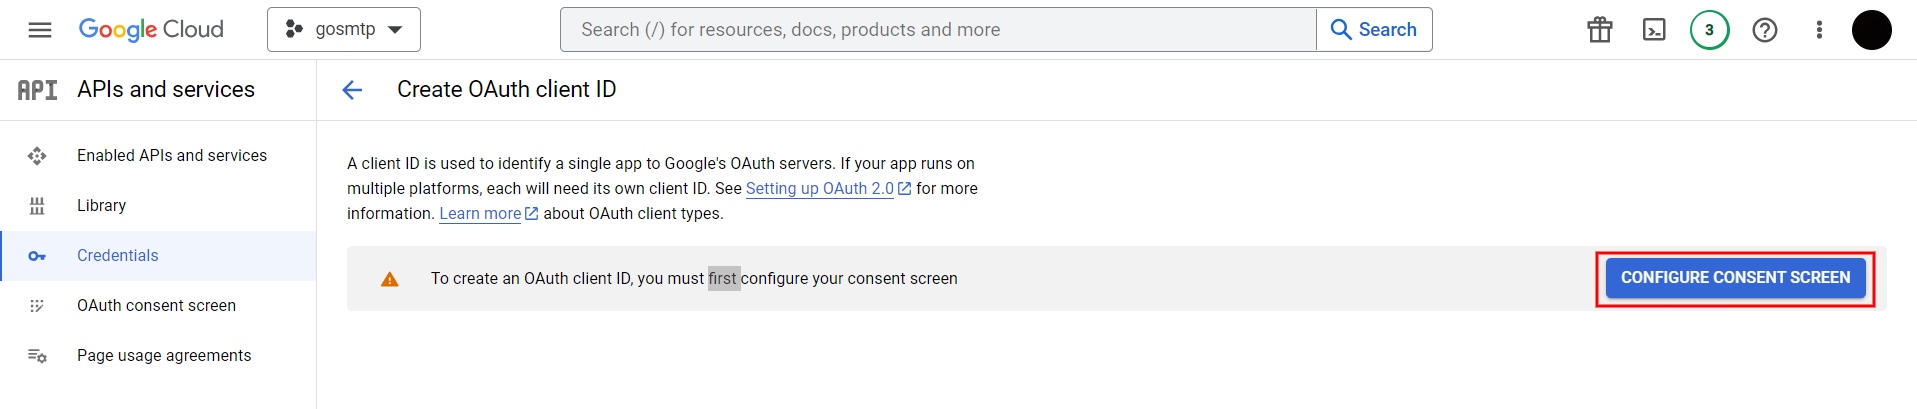 gmail_configugure_consent_screen